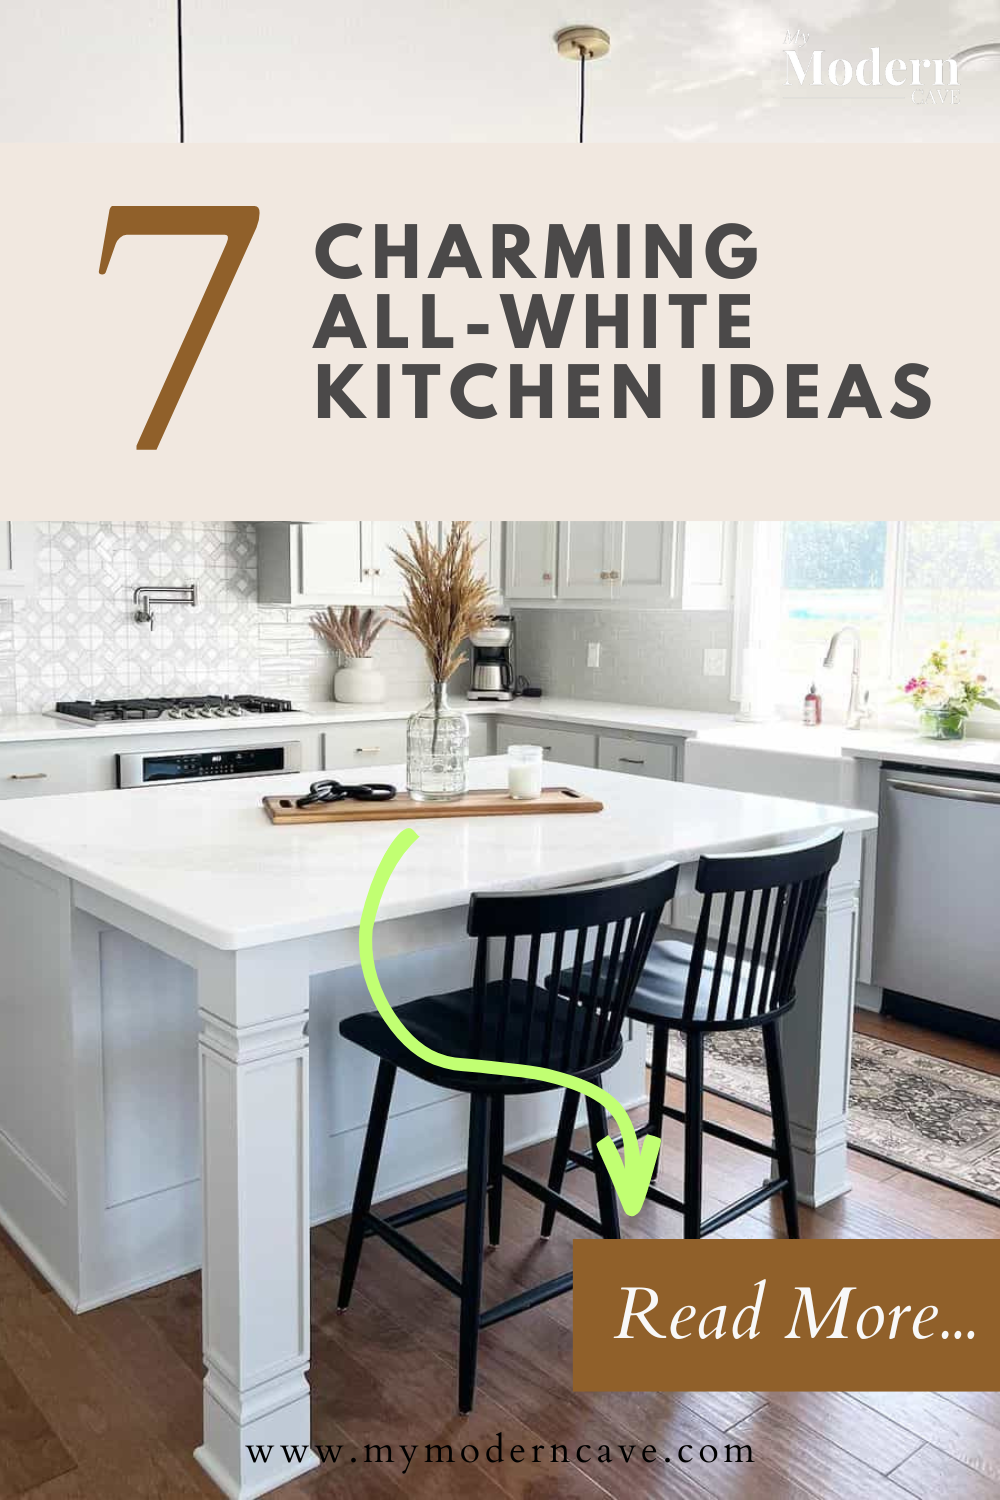 All-White Kitchen  Ideas Infographic